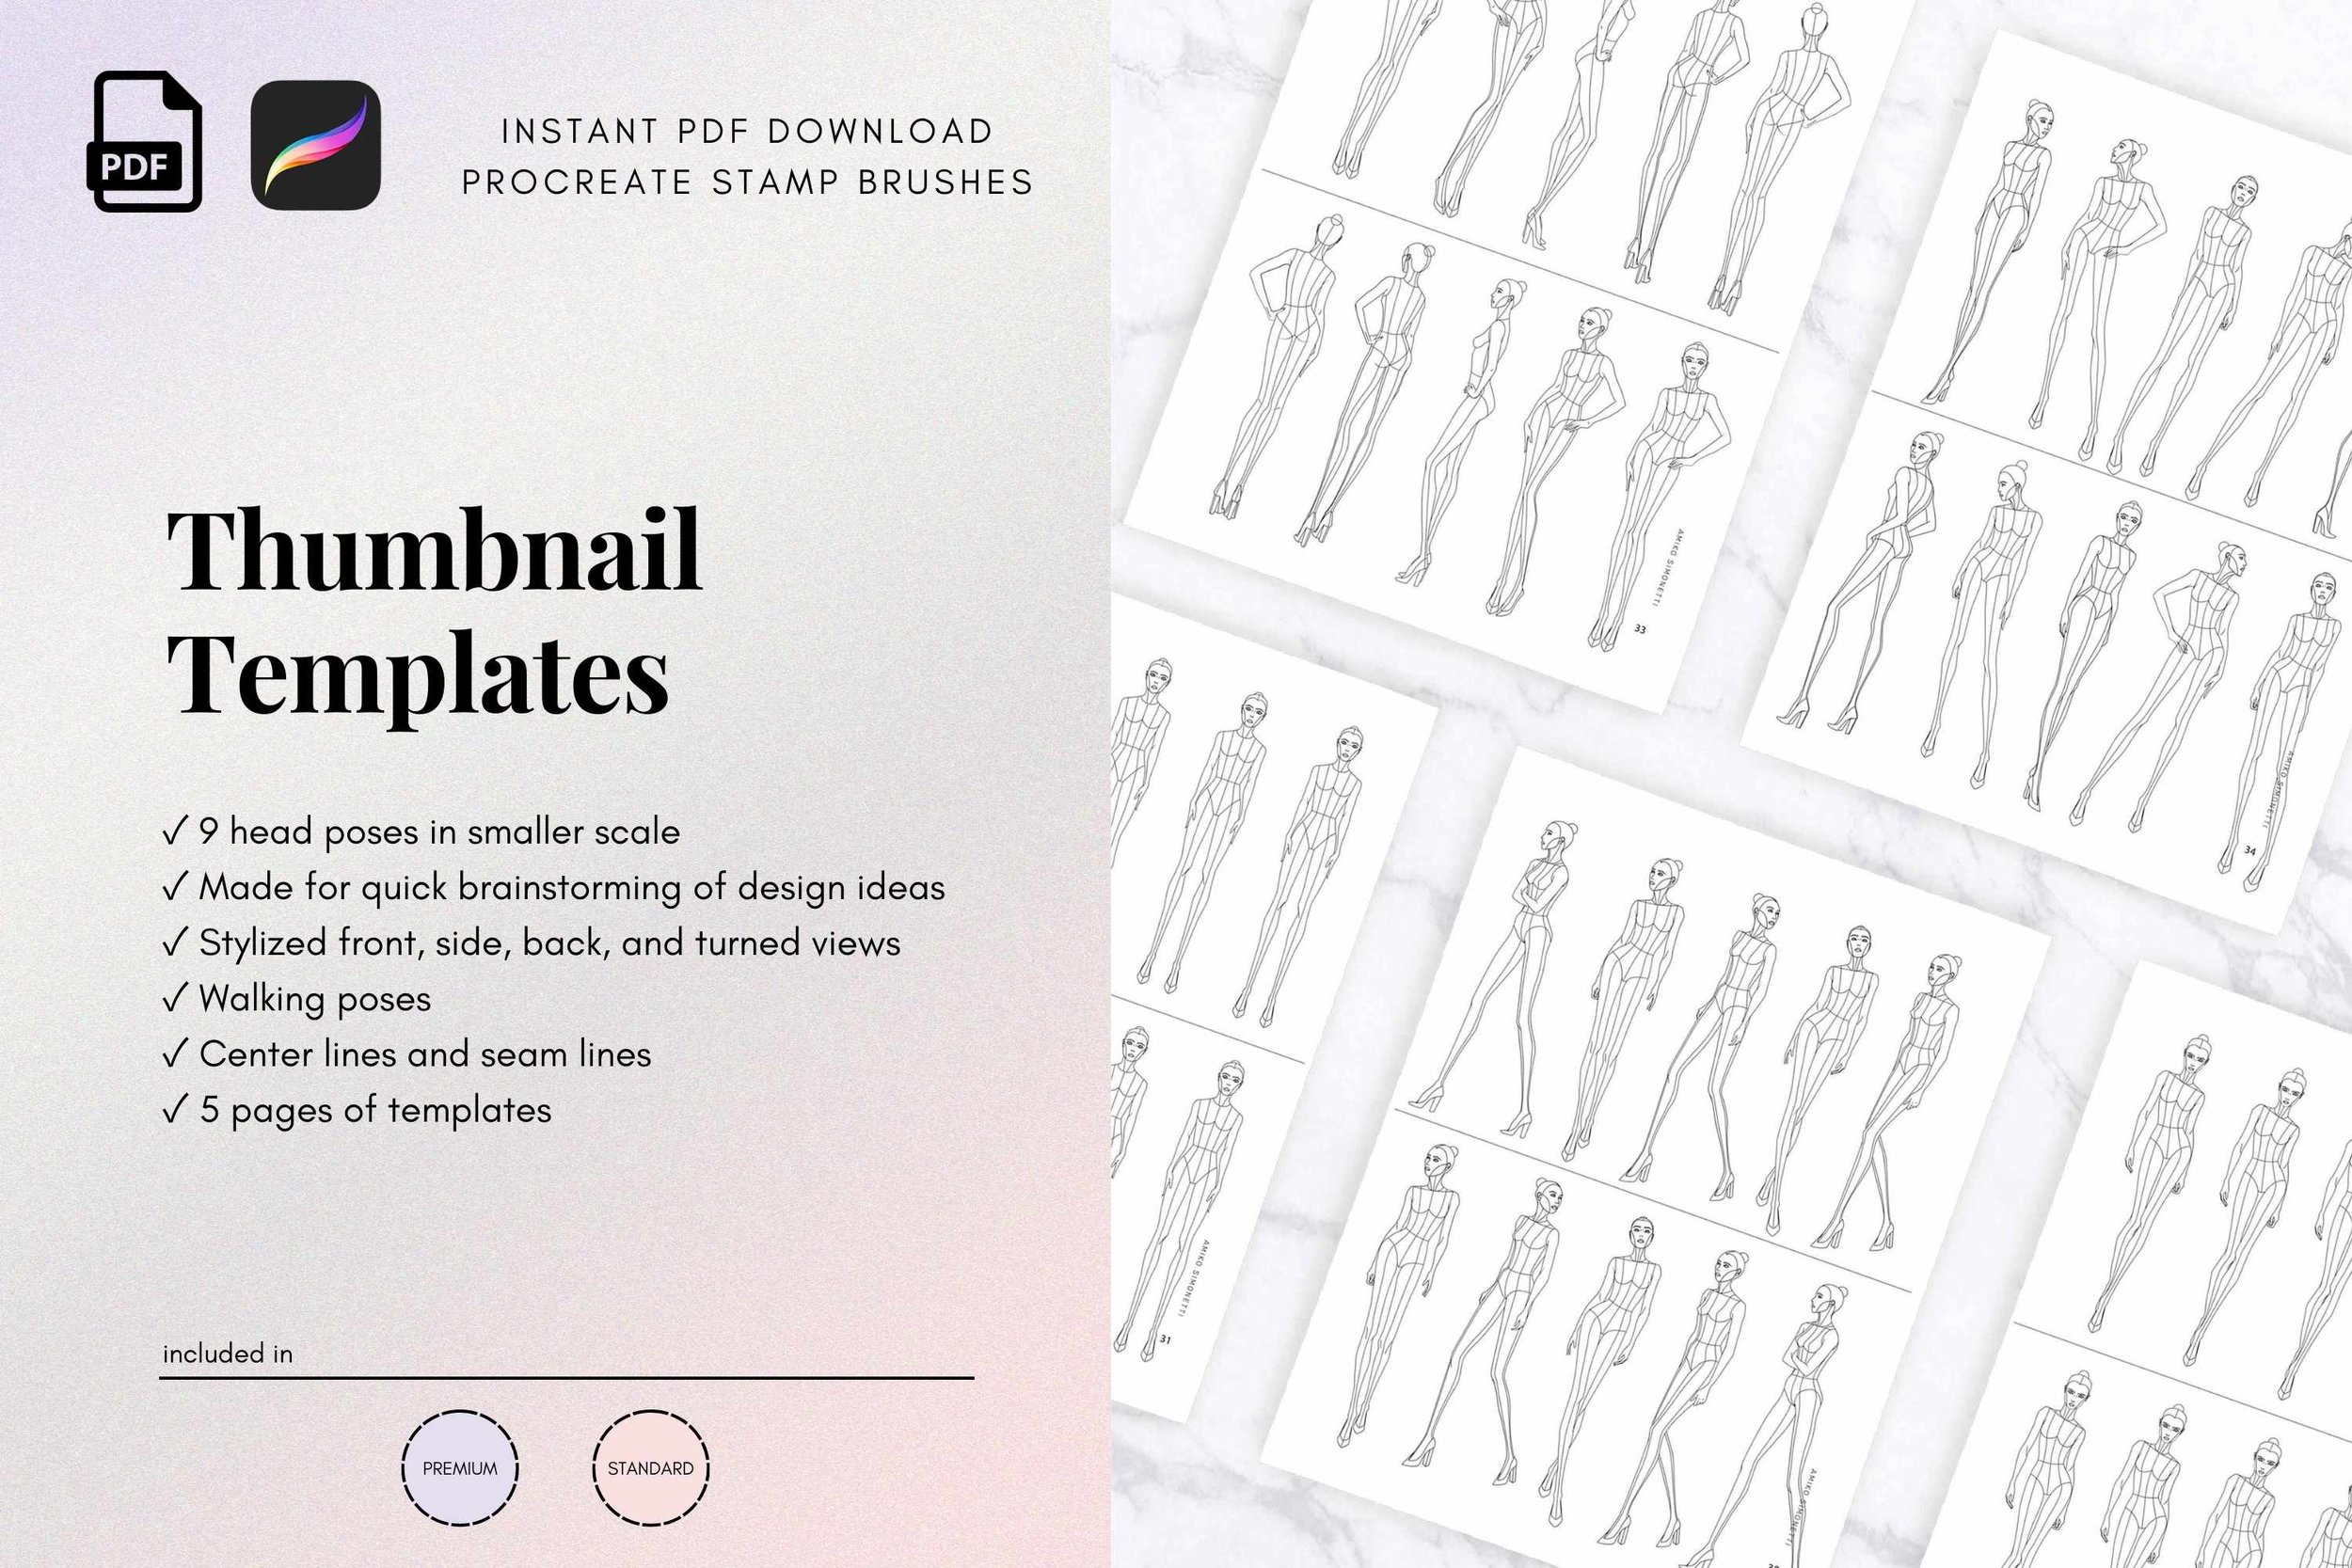 Thumbnail Templates (female body fashion design templates in small size) (Copy)